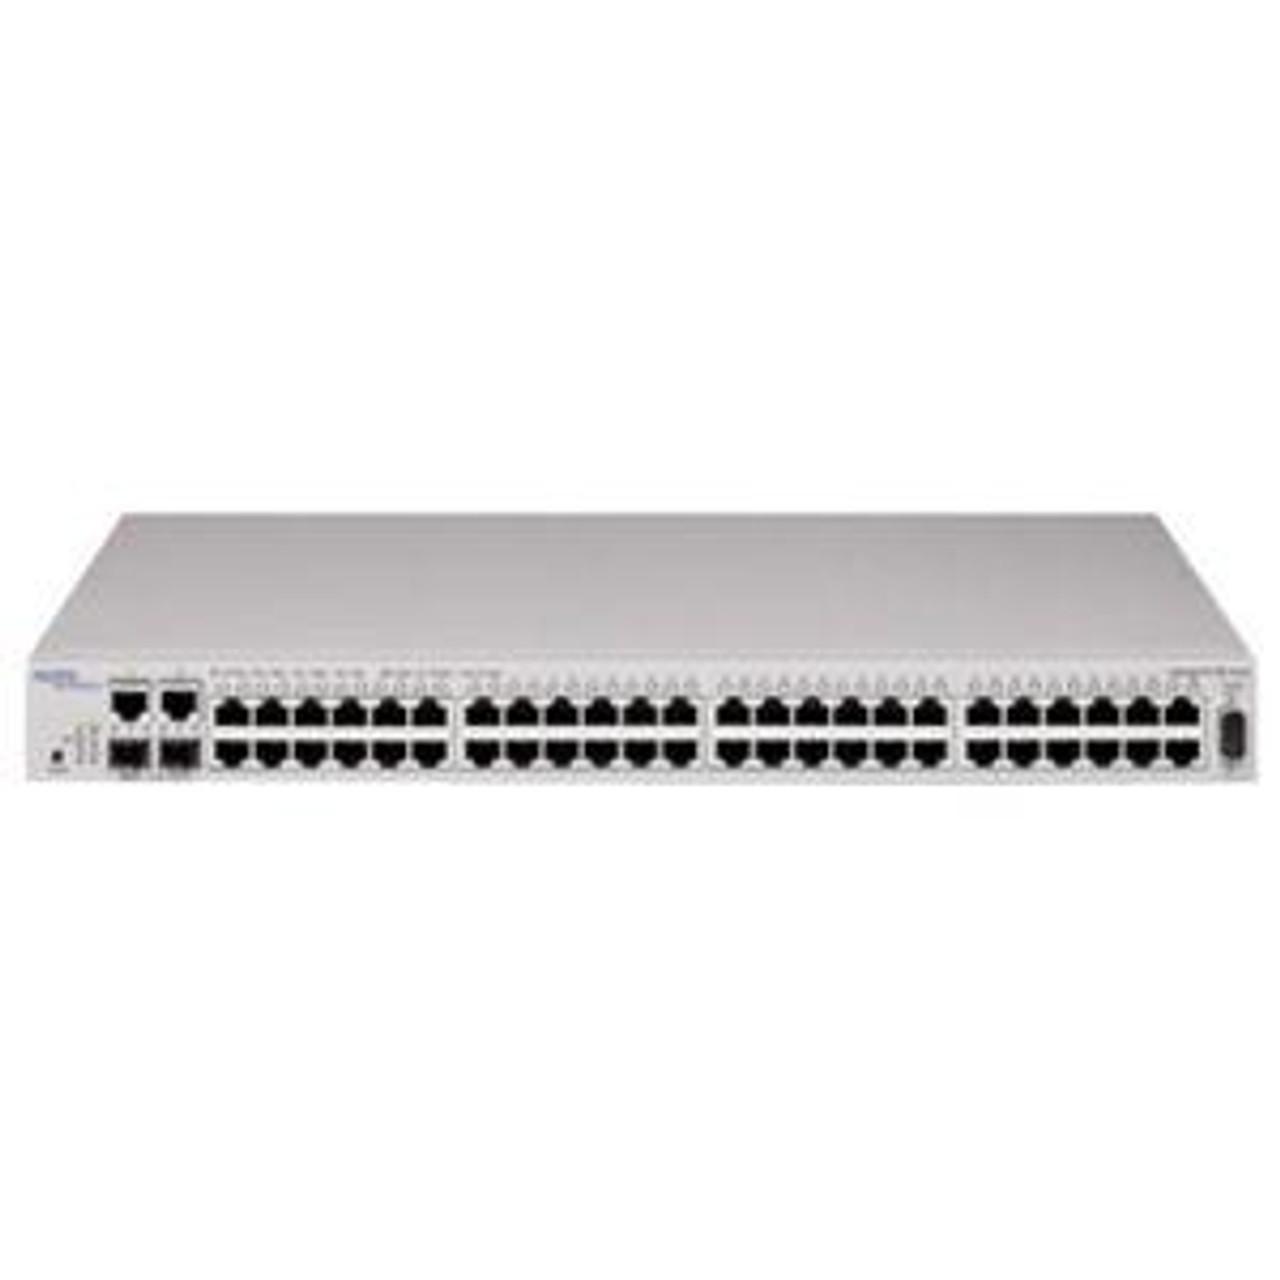 AL2012B44-E5 Nortel Ethernet Switch 425-48T 48-Ports EN Fast EN 10Base-T 100Base-TX + 2x10/100/1000Base-T/SFP mini-GBIC uplink 1U Stackable (Refurbished)